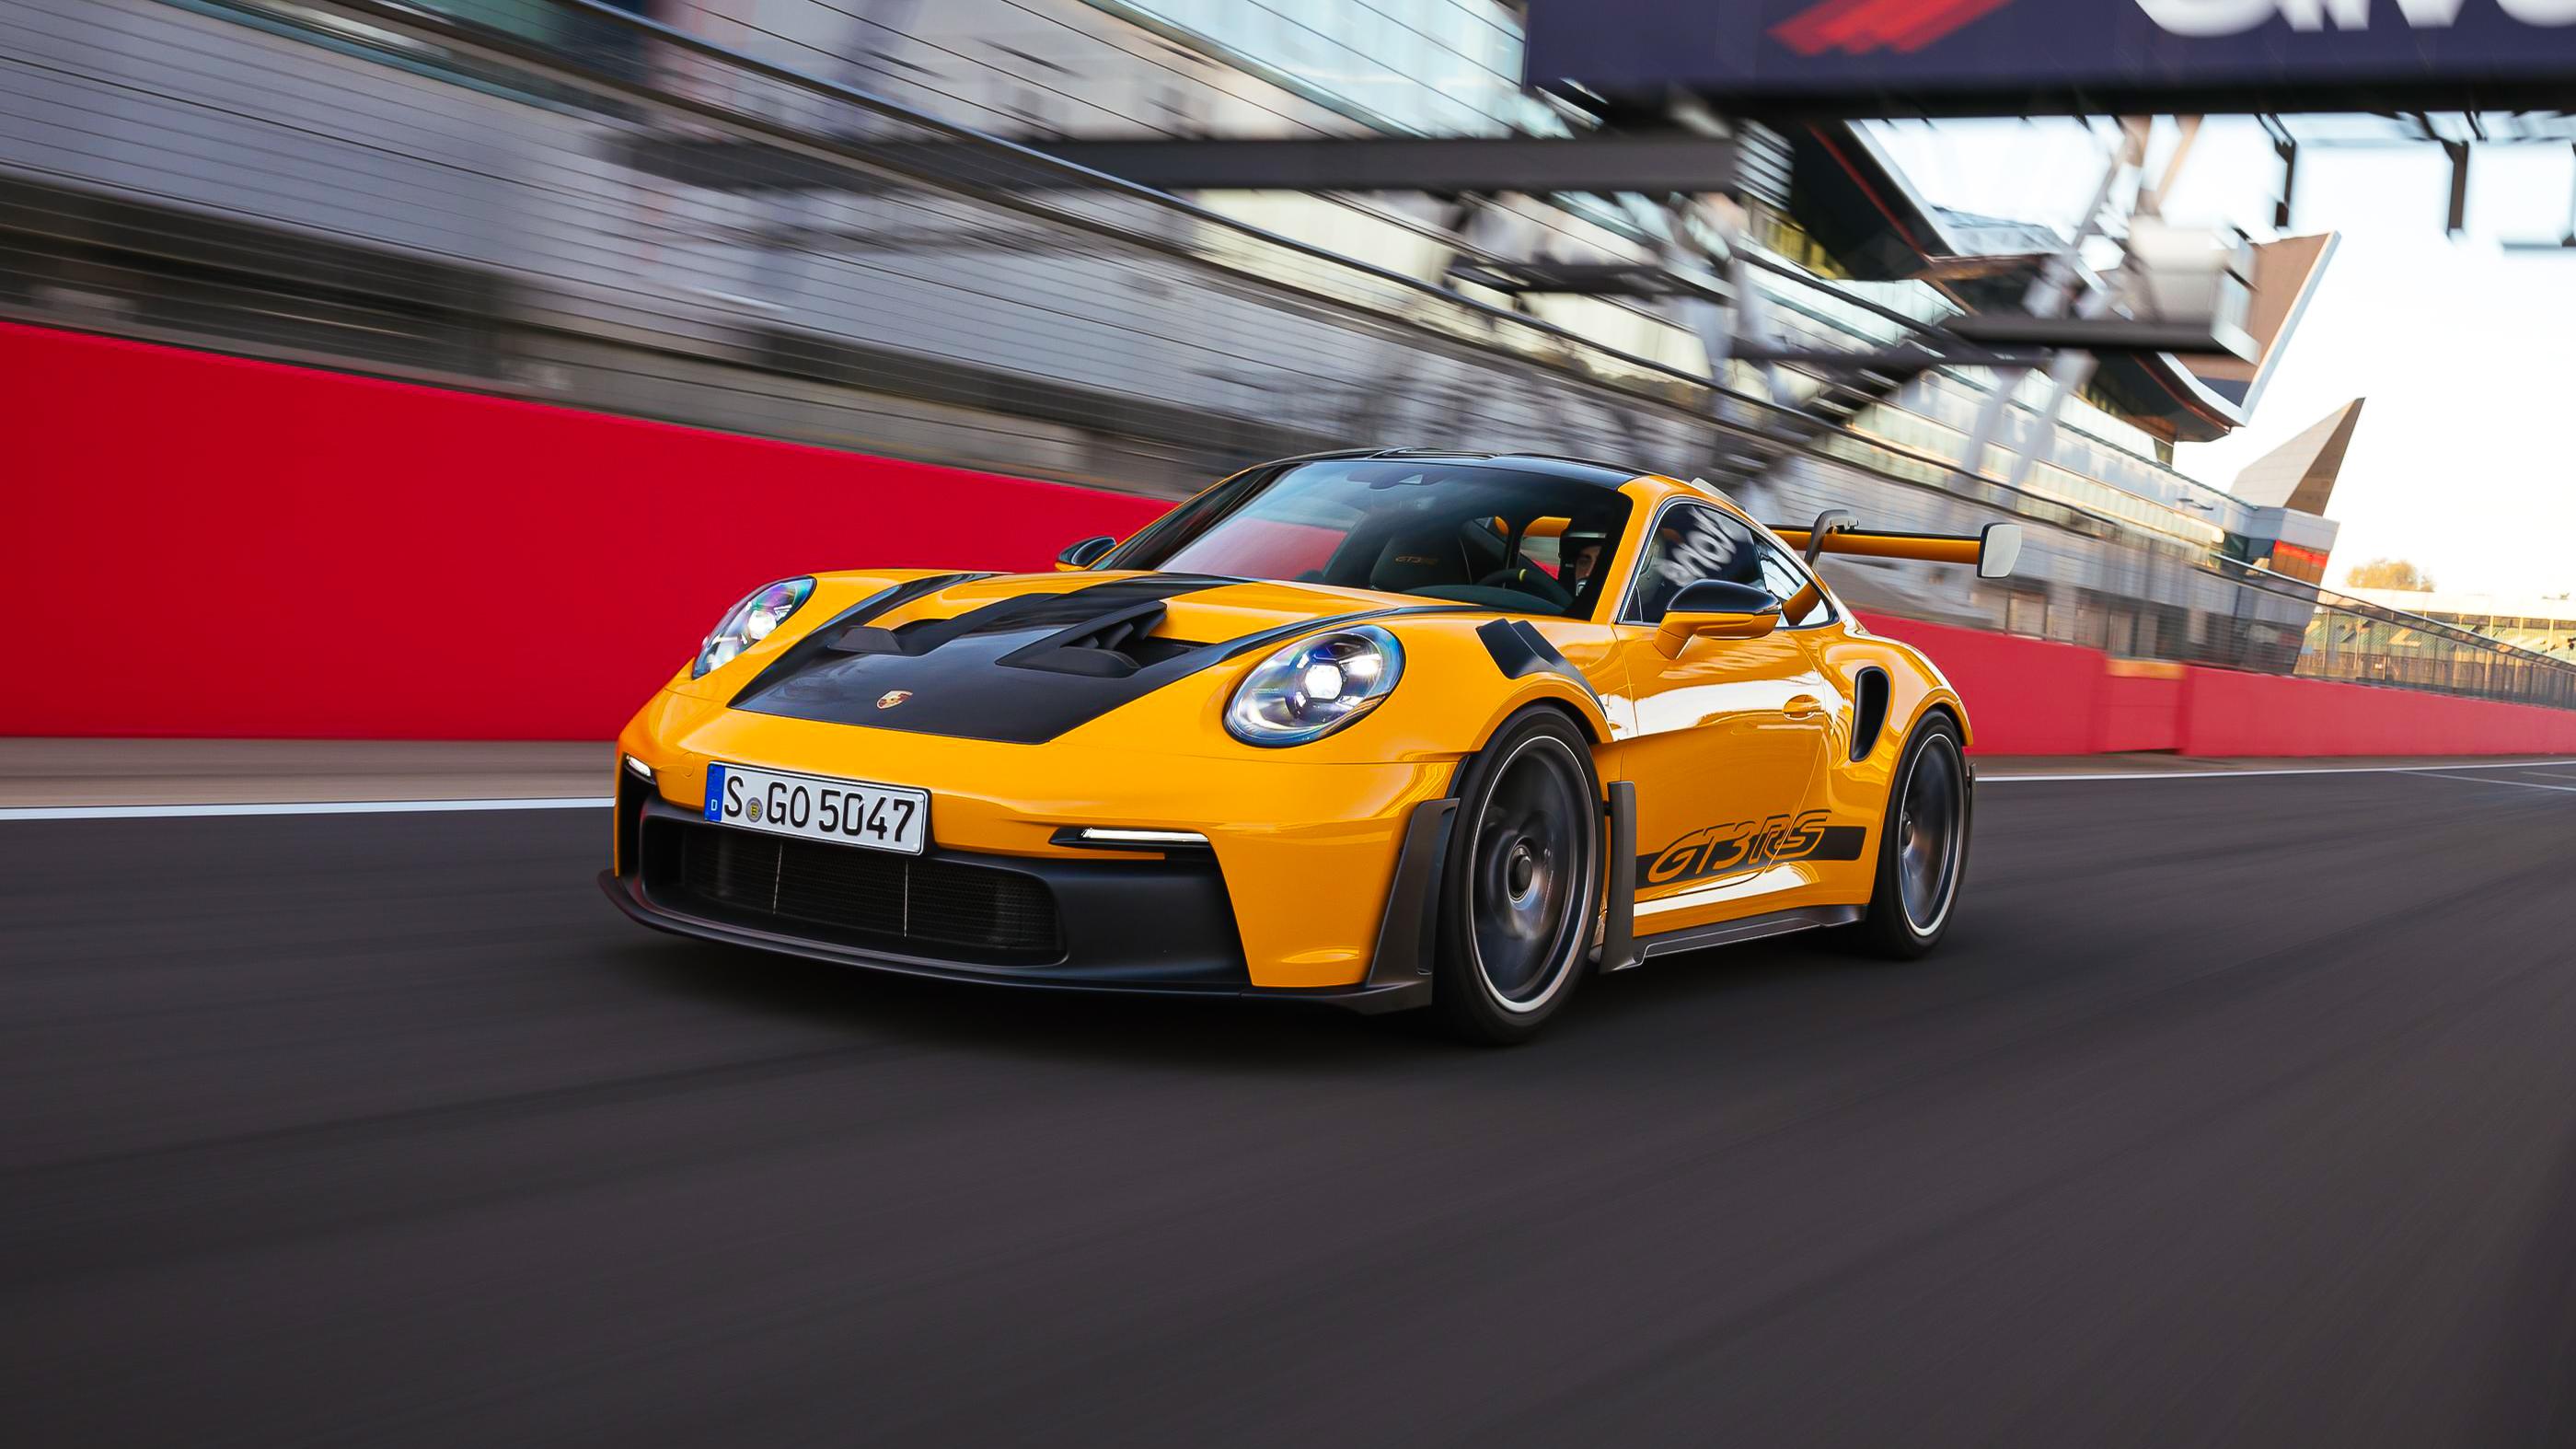 Porsche raises prices on most models in Australia drivingdynamics